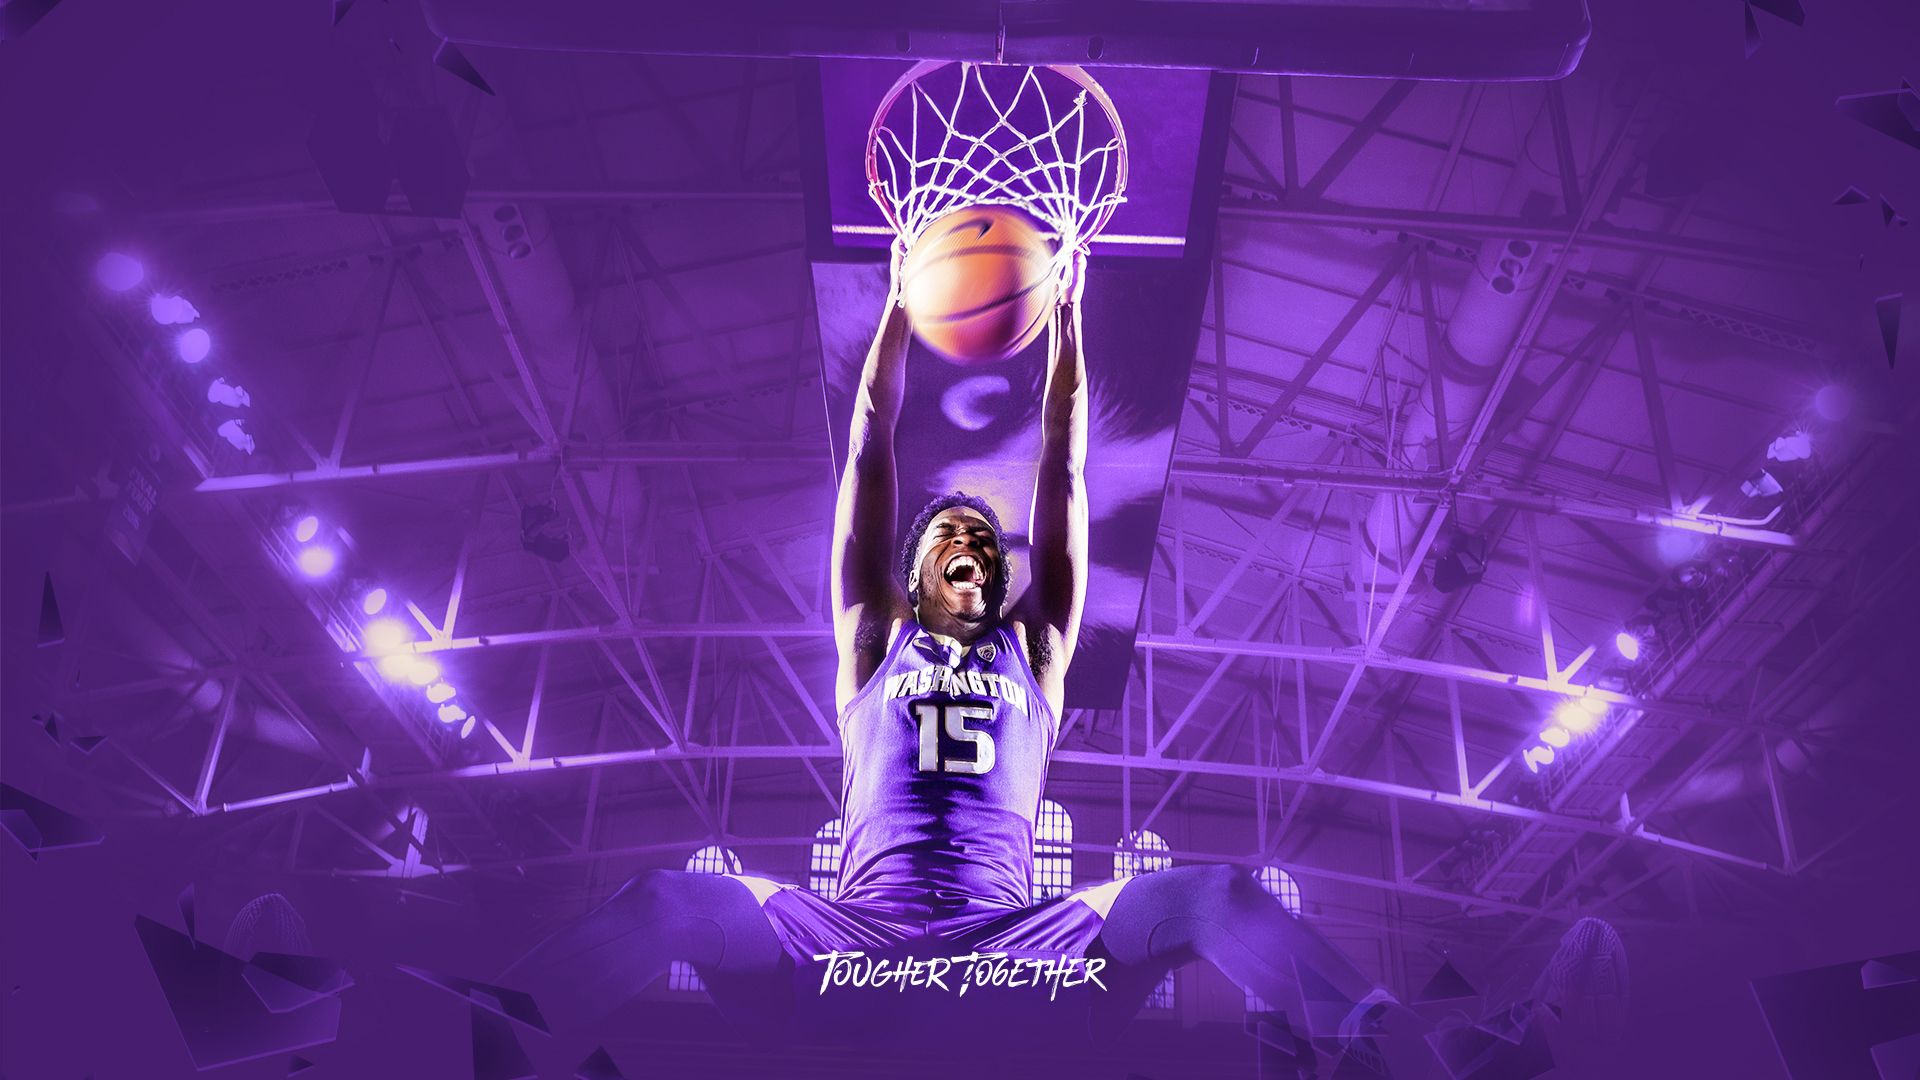 Wallpaper Street Basketball Basketball Hoop Building Purple Background   Download Free Image